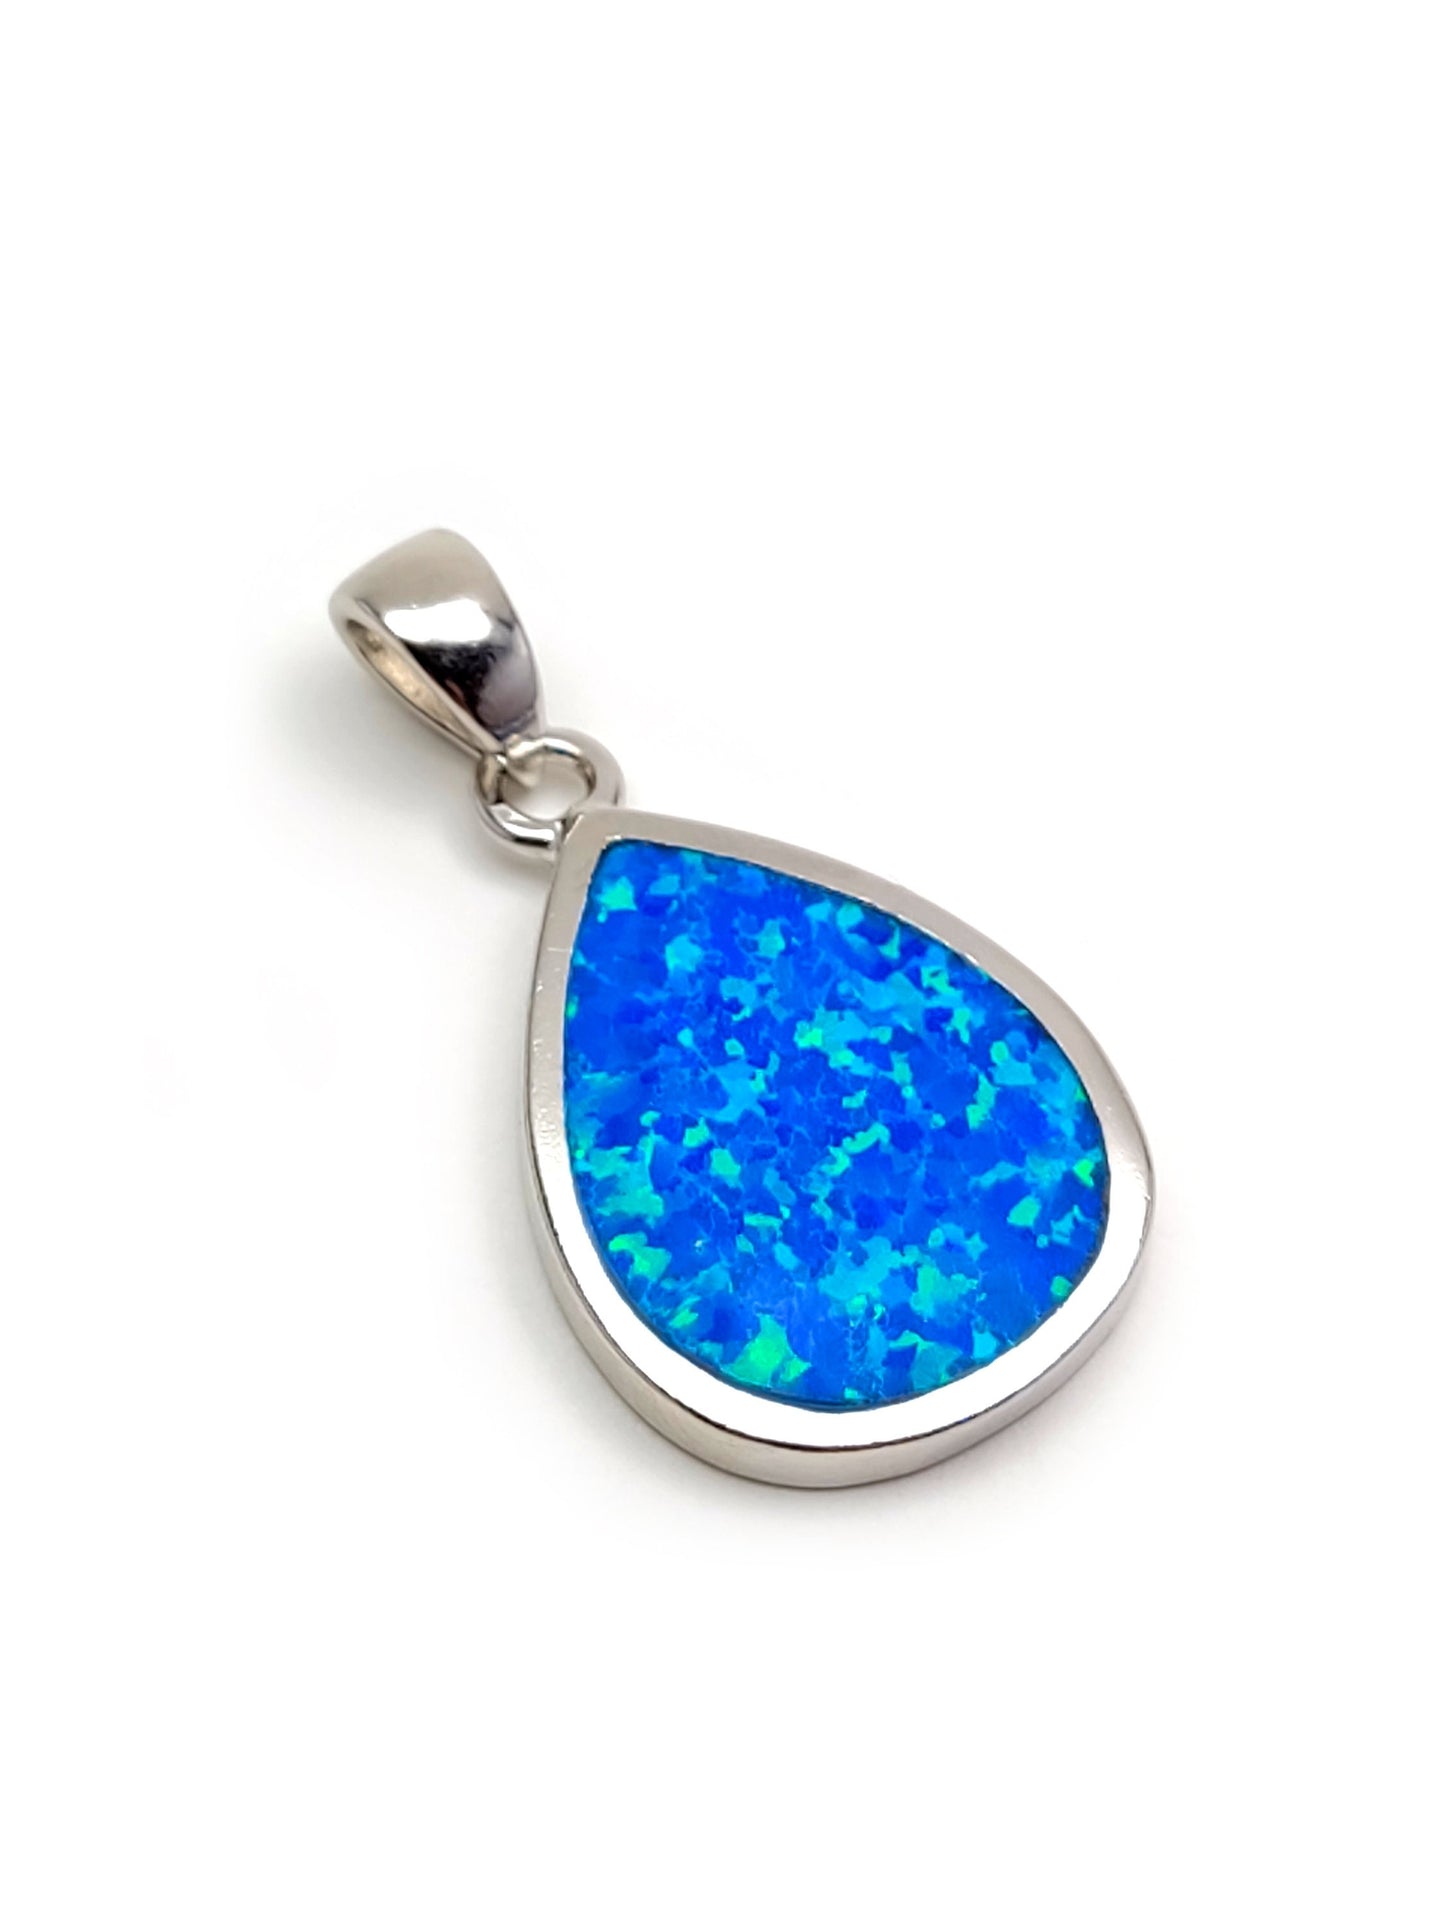 Drop shape blue opal pendant made of silver.